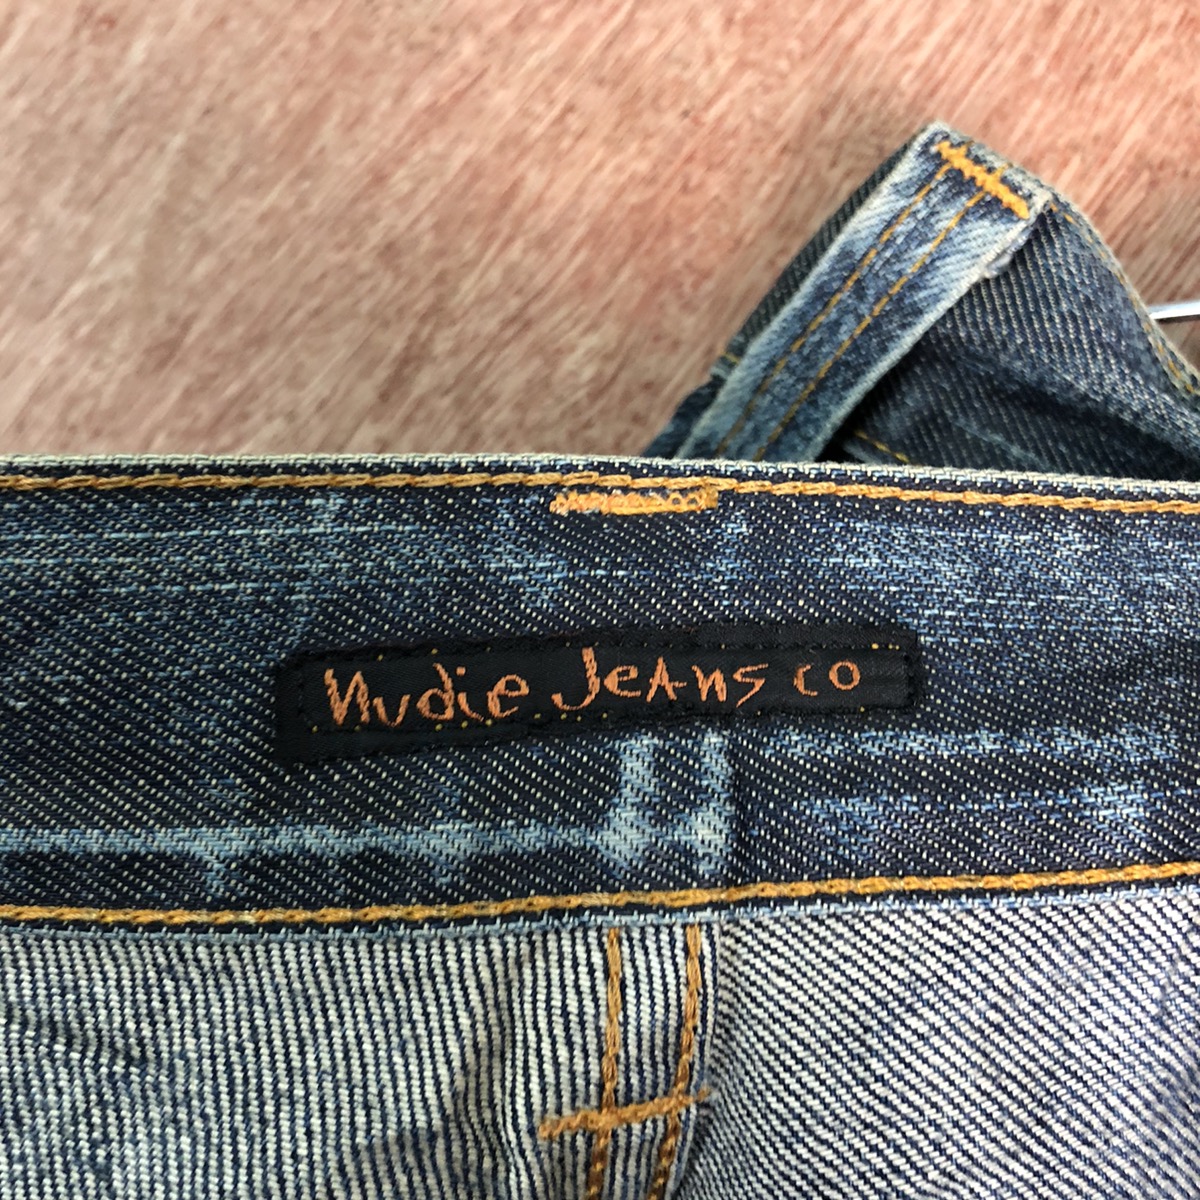 Nudie Jeans Co Blue Denim Jeans Pants #c139 - 6